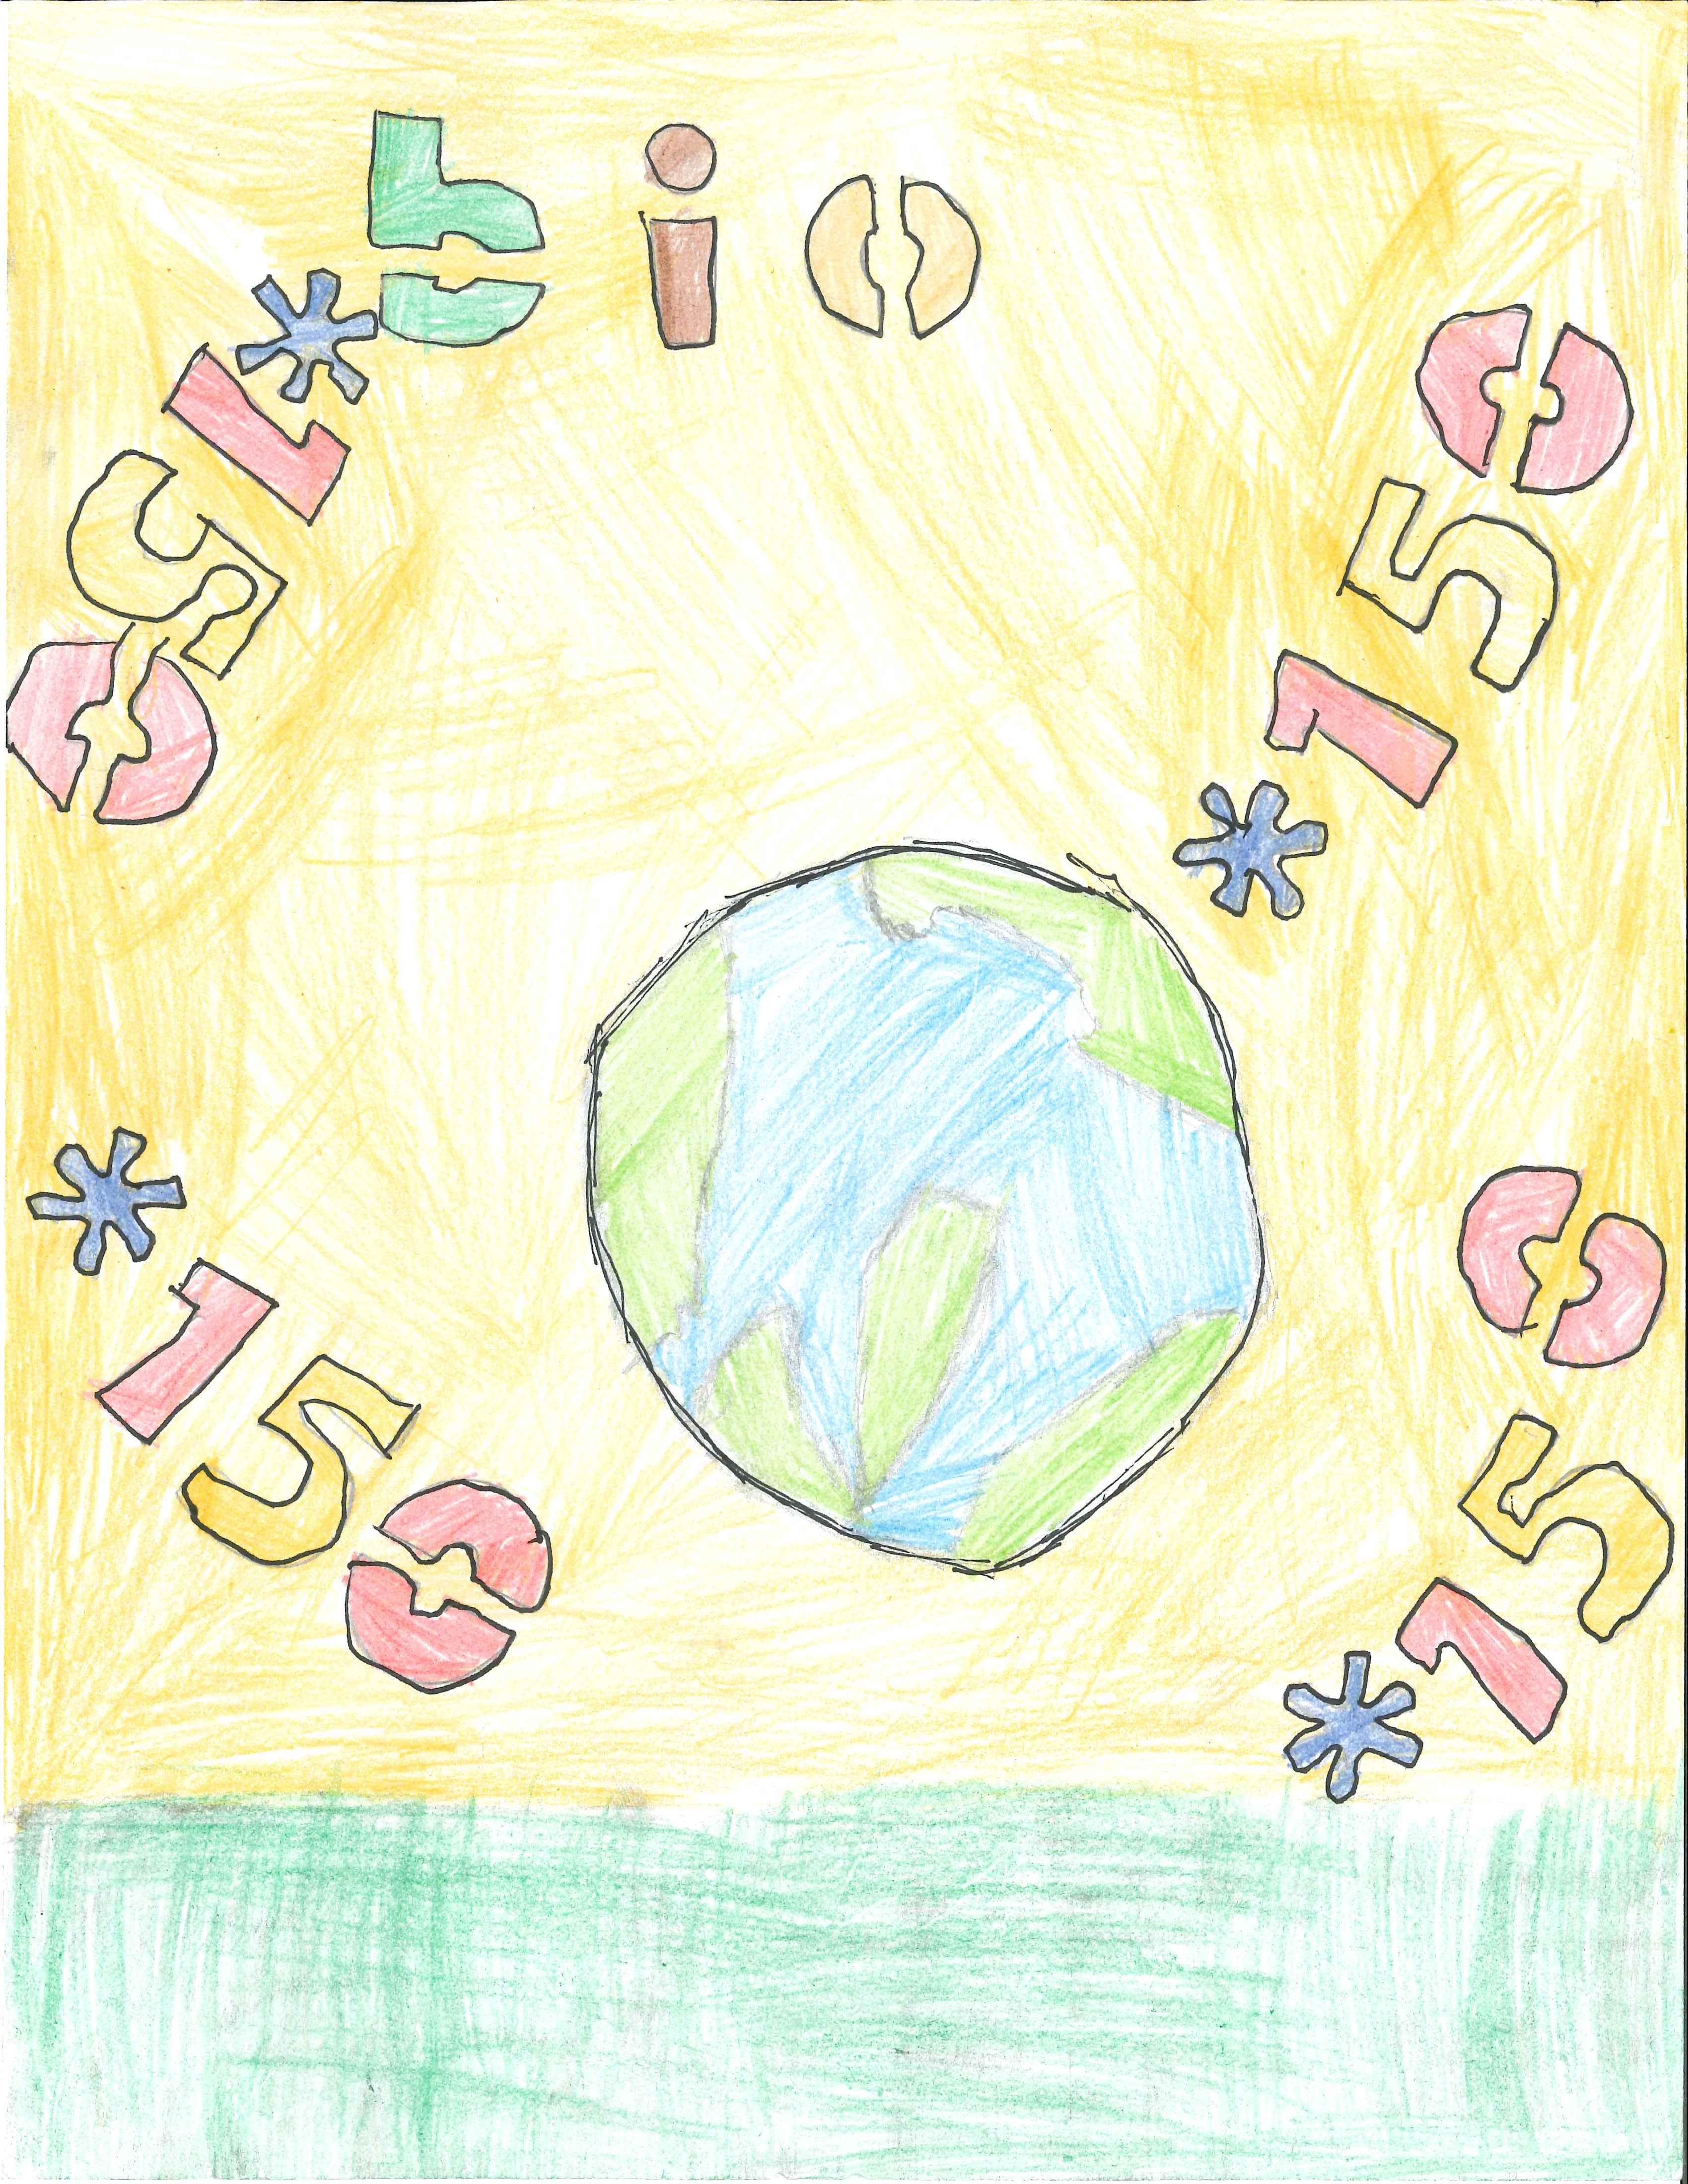 Jyousif H. Grade 6. "BIO 150 earth"